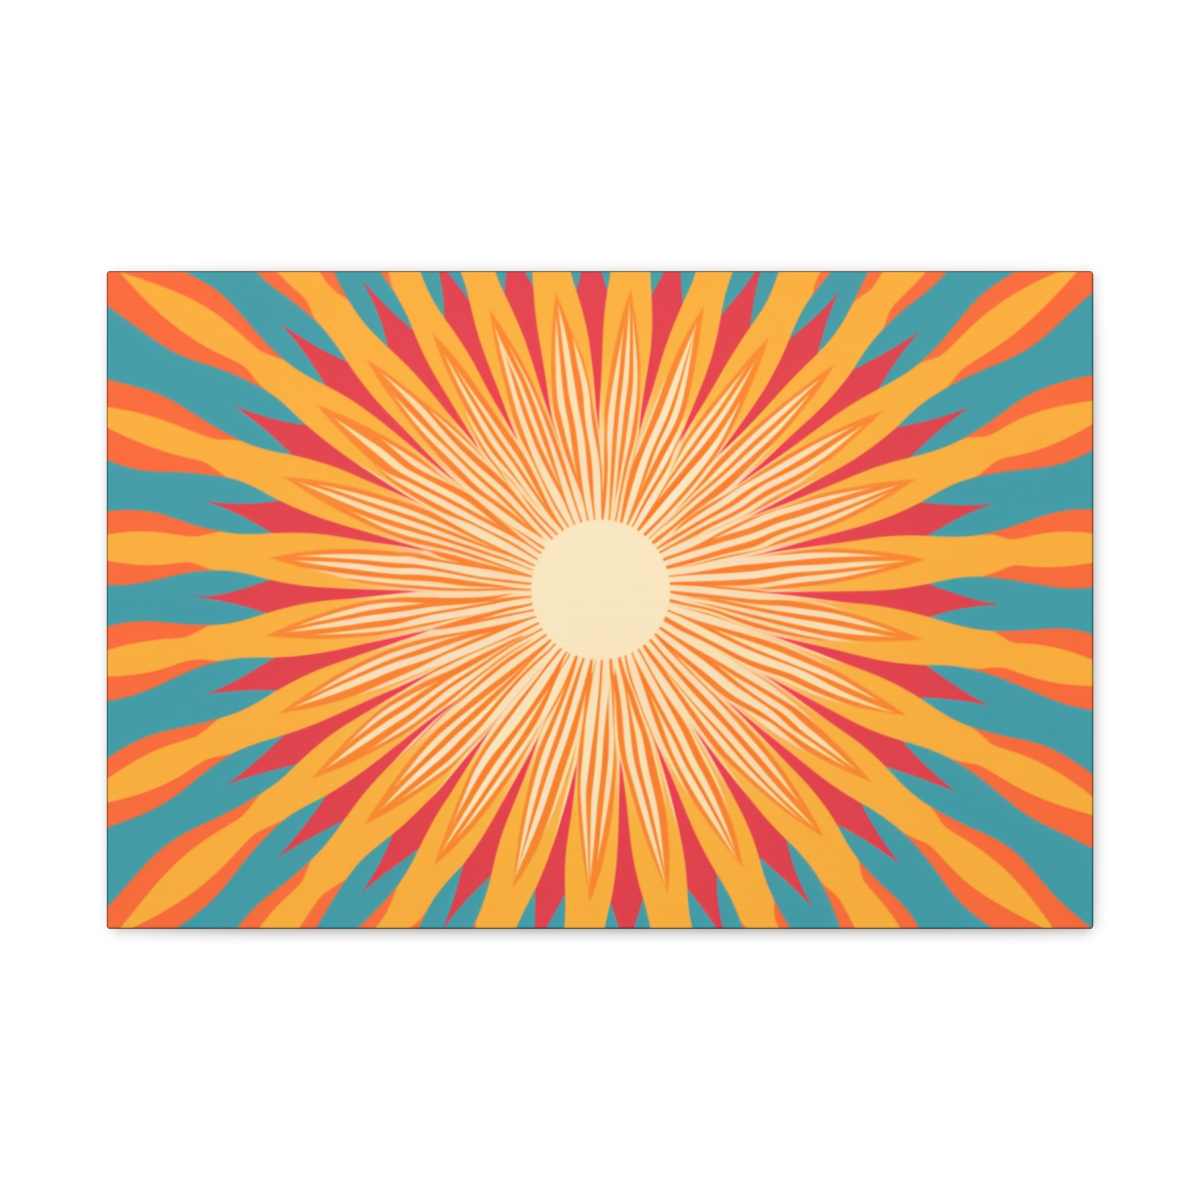 Spiritual Hippie Sun Art Canvas Print: The Sun From Eons